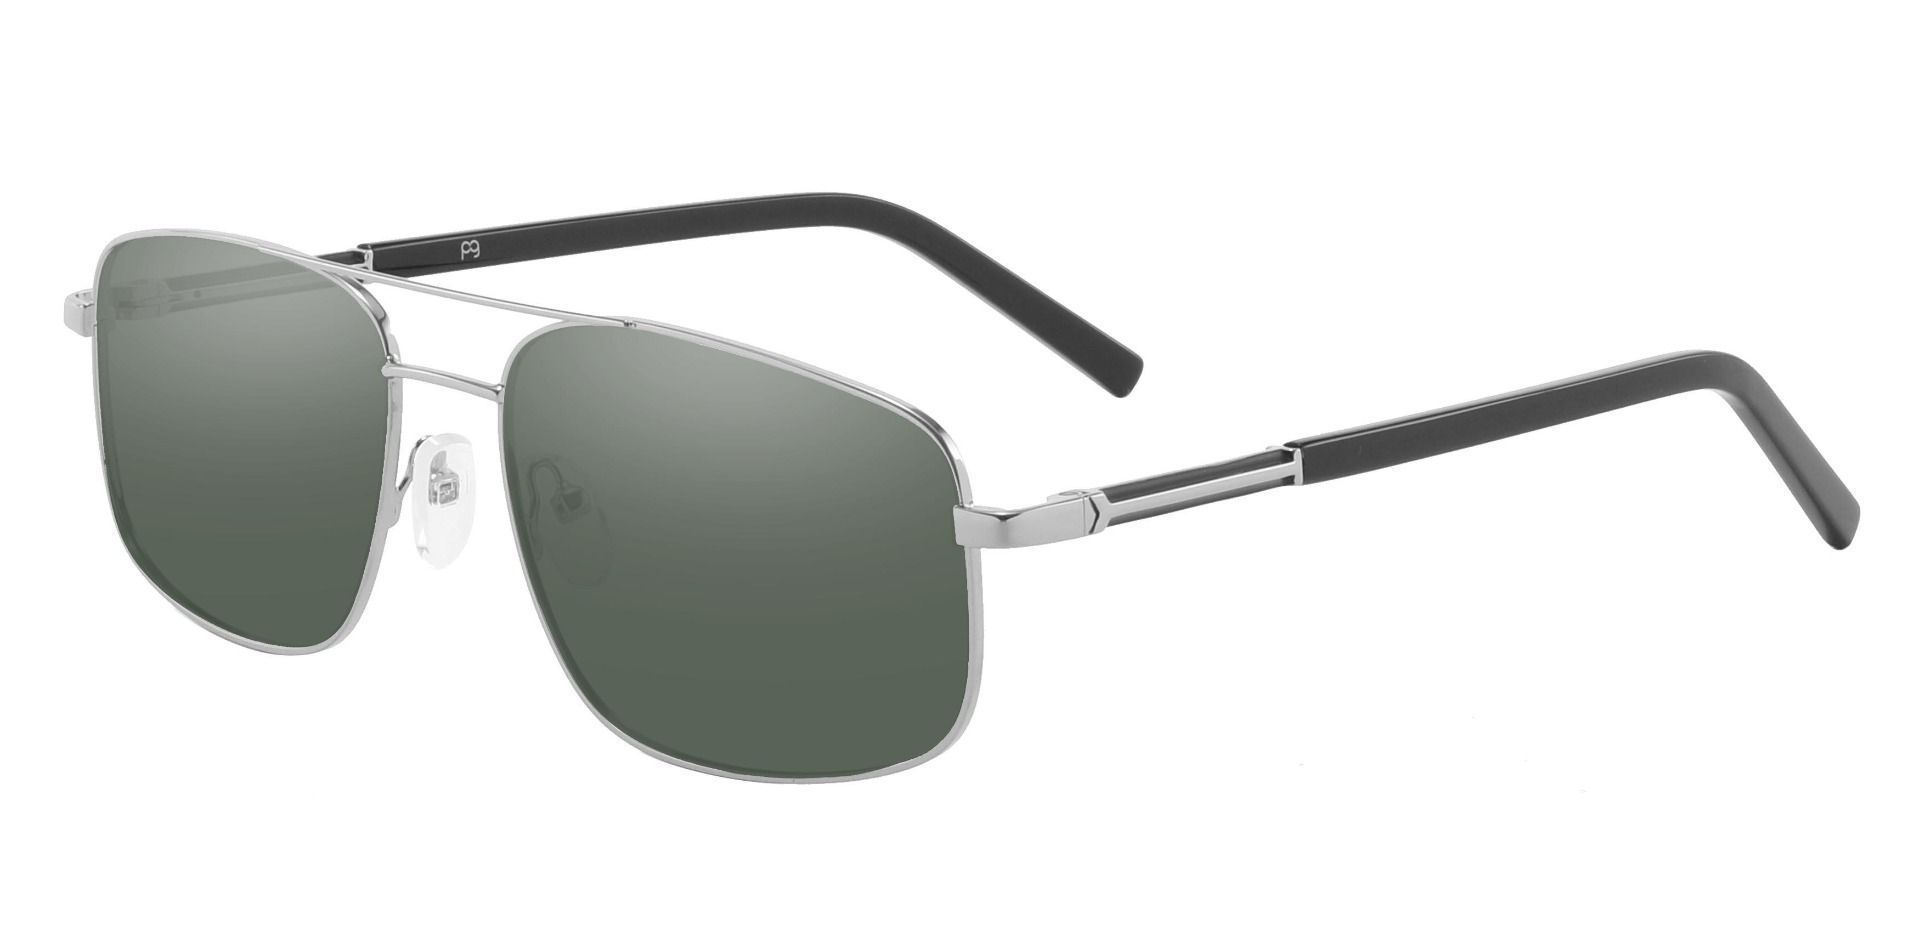 Davenport Aviator Non-Rx Sunglasses - Silver Frame With Green Lenses